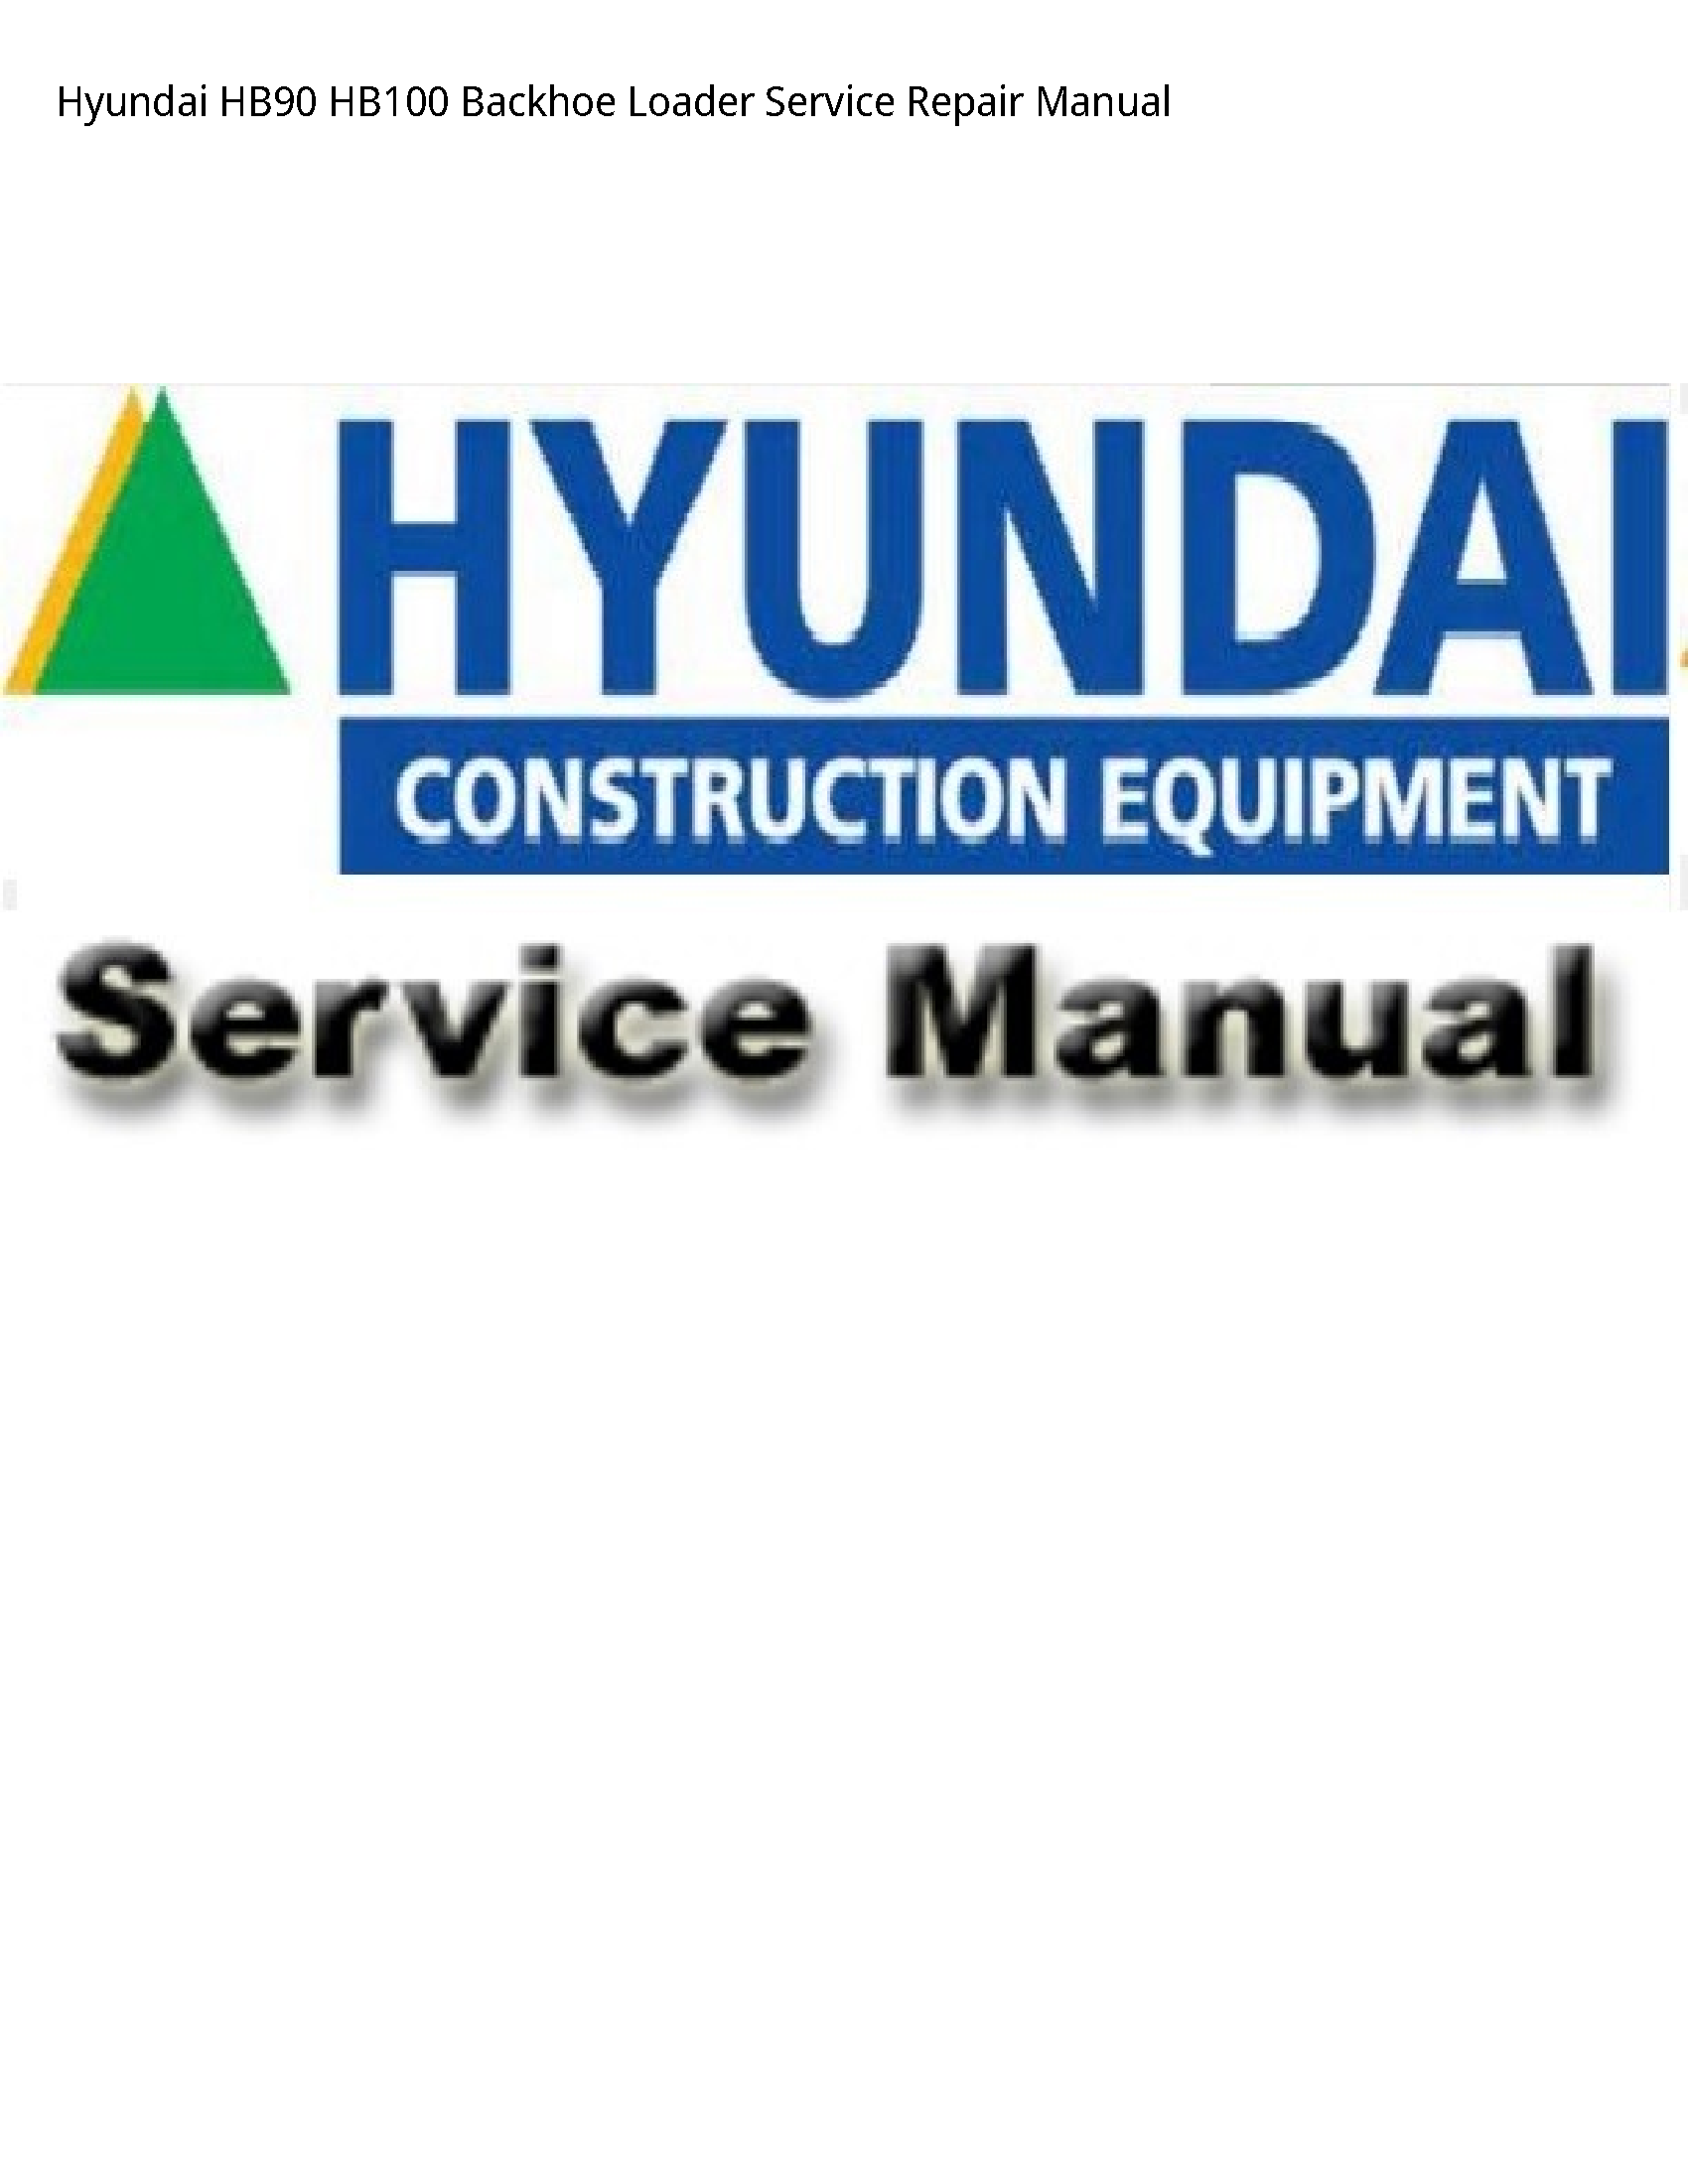 Hyundai HB90 Backhoe Loader manual